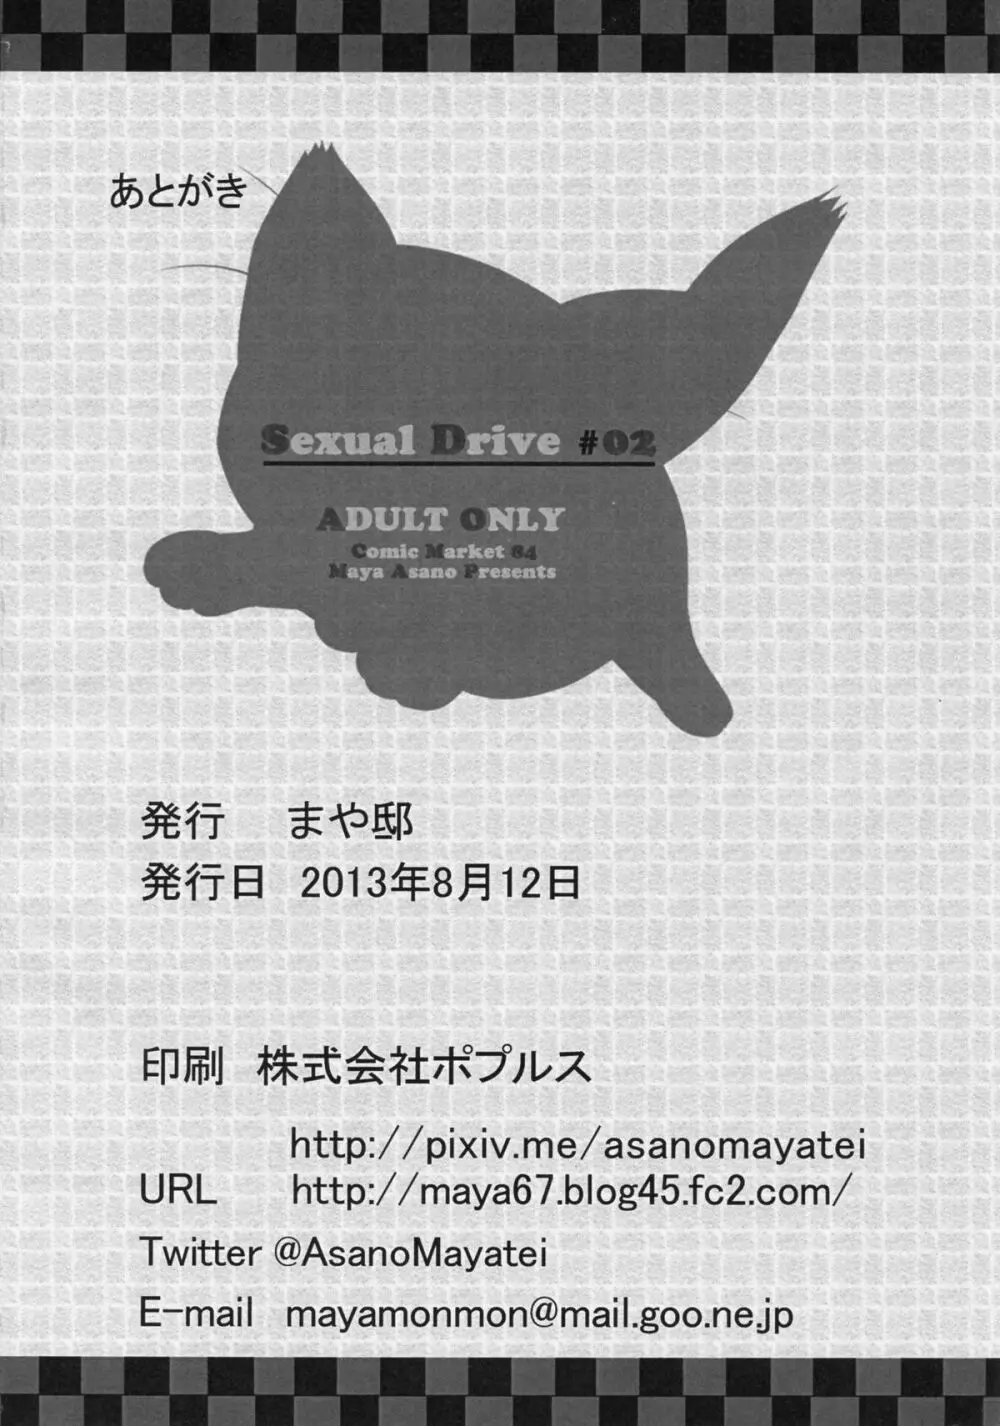 Sexual Drive #02 29ページ